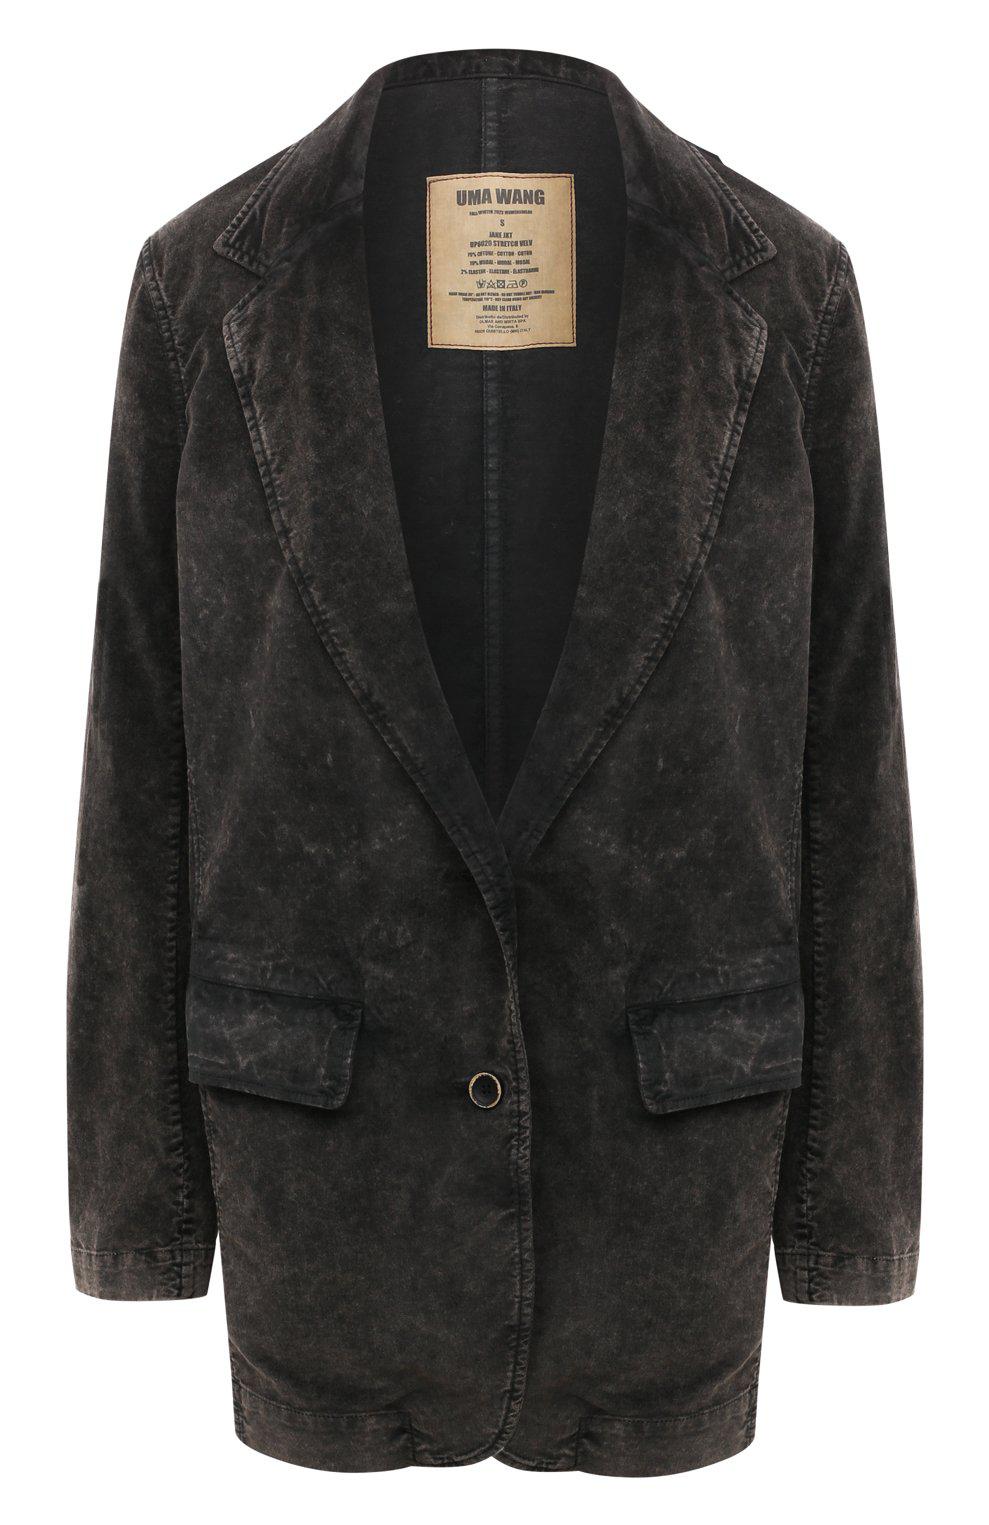 Velvet jacket, Uma Wang, RUB 103,500.